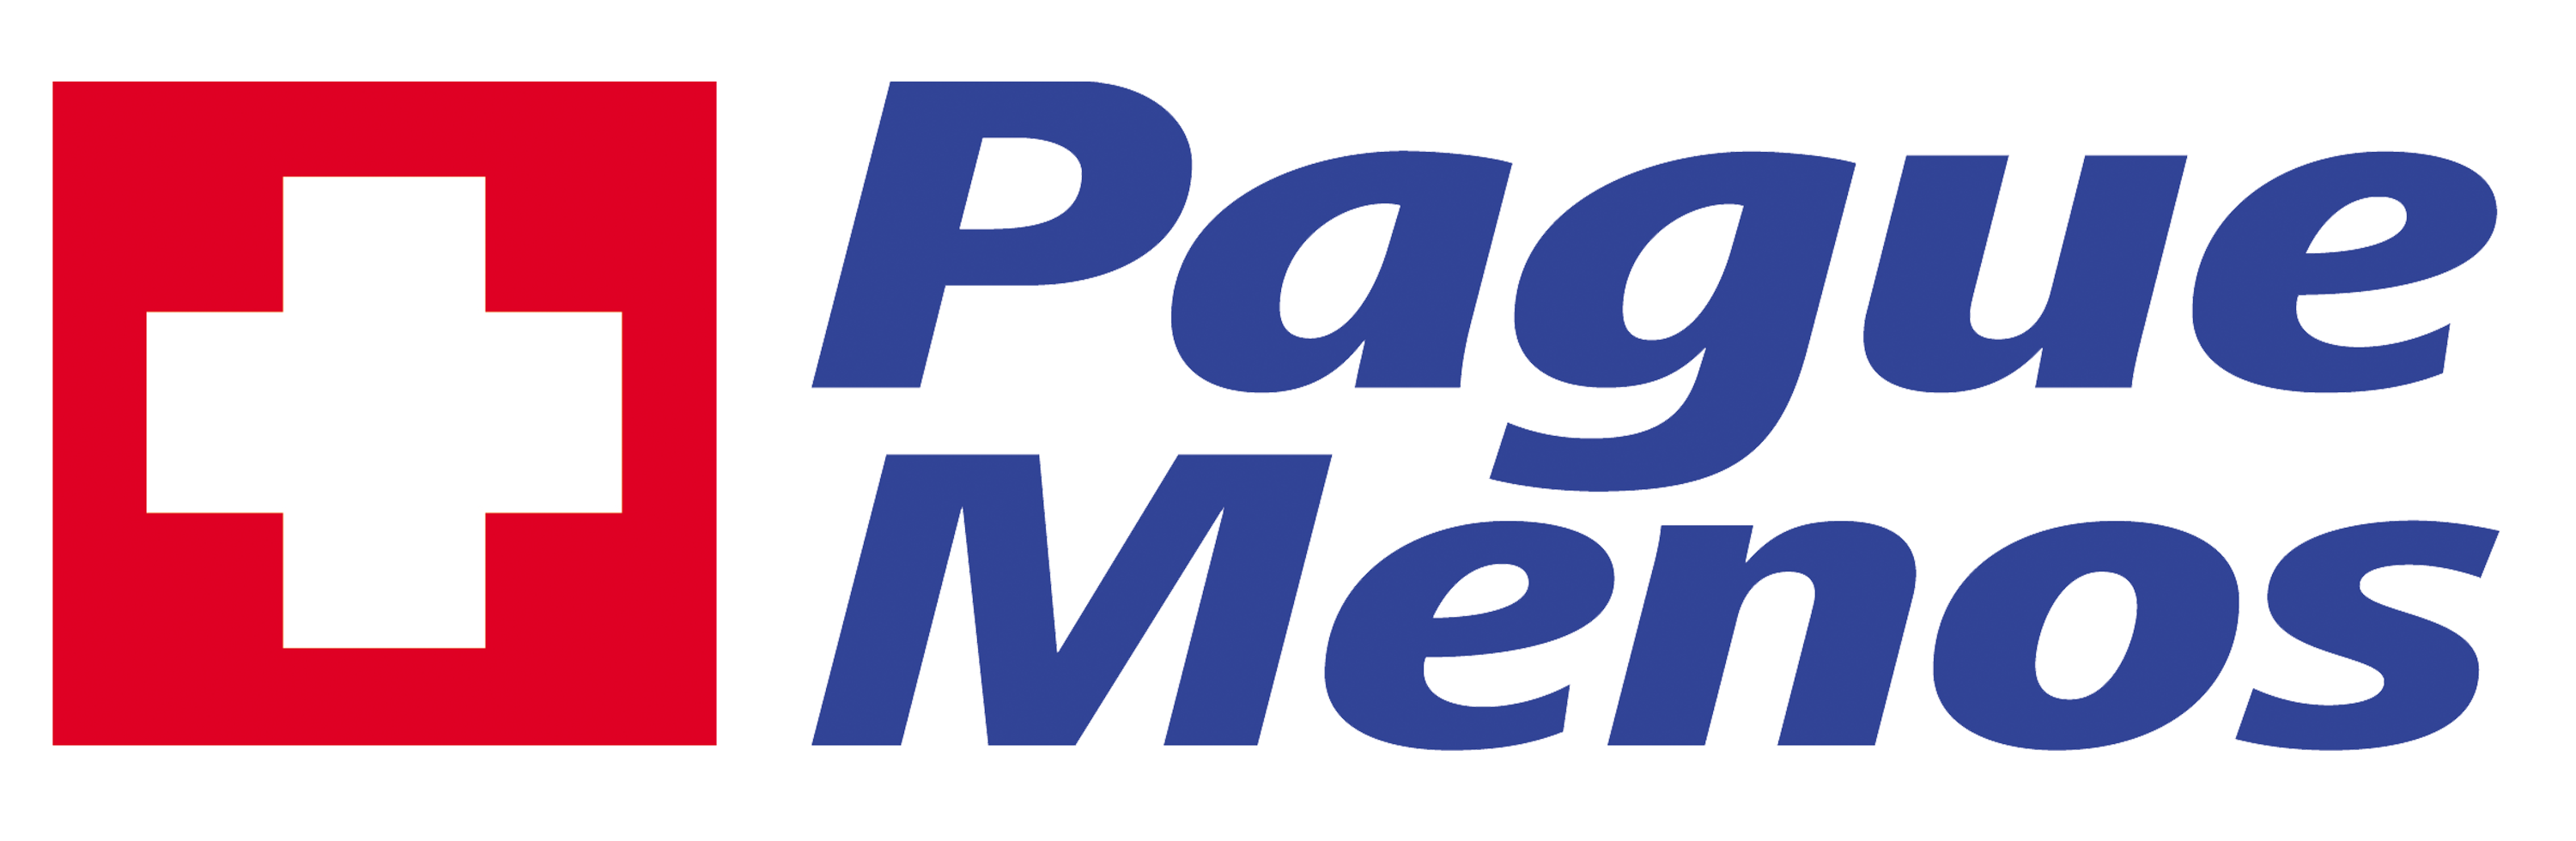 Farmacia Pague Menos - Umarizal - PA